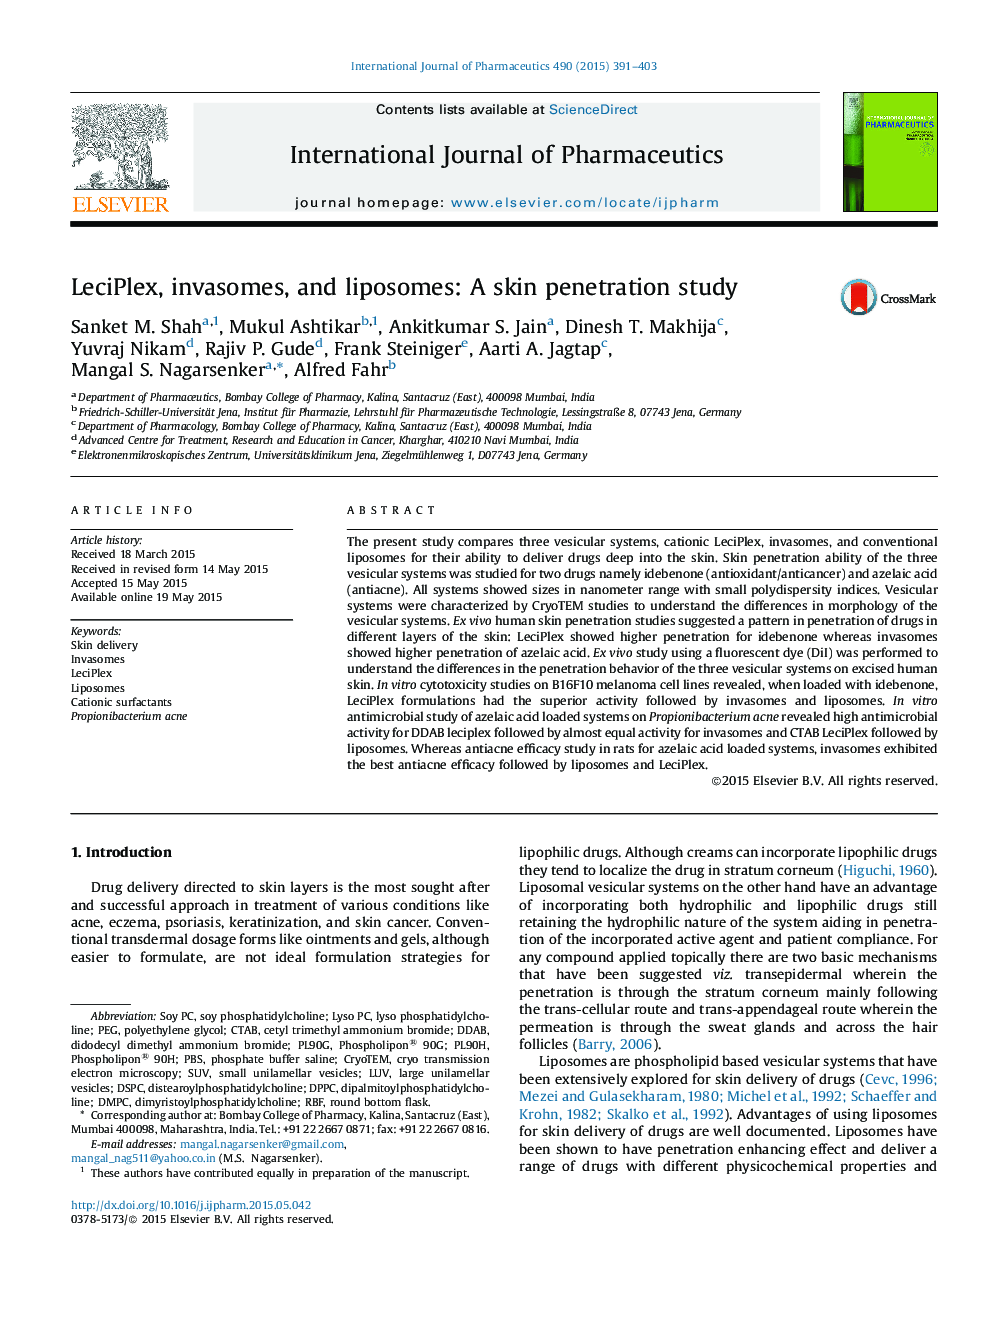 LeciPlex, invasomes, and liposomes: A skin penetration study